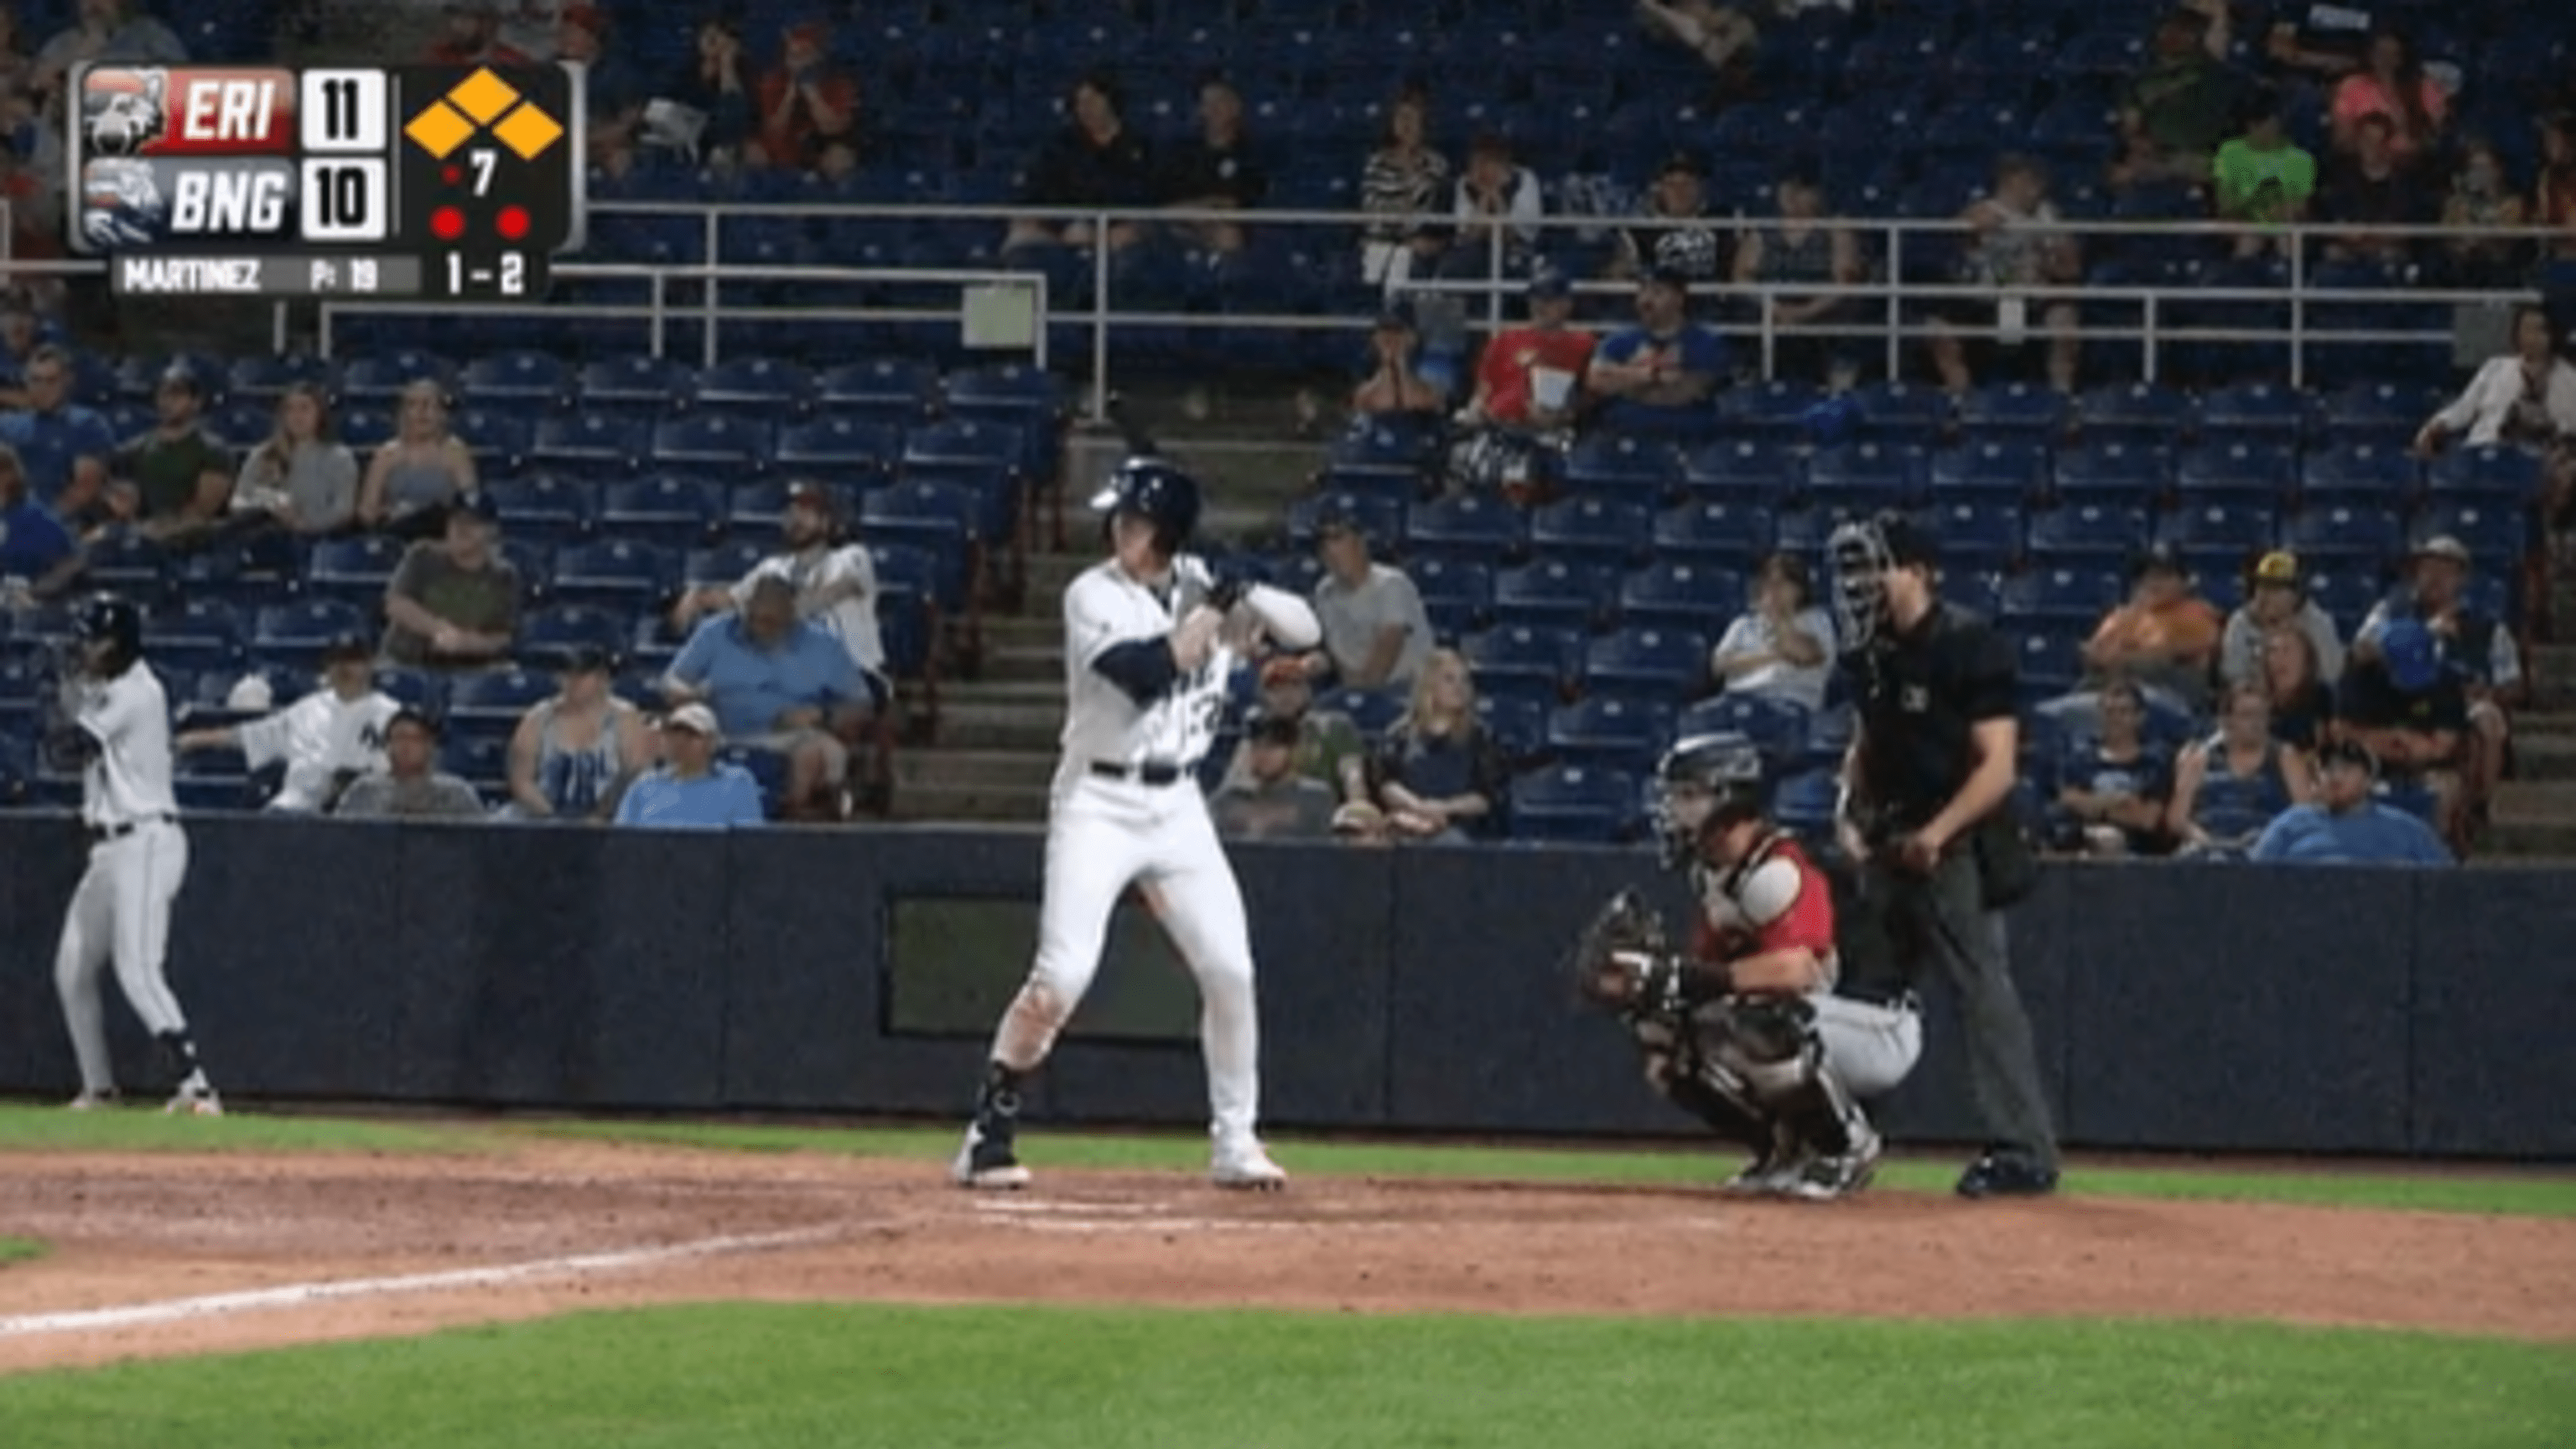 Brett Baty, No. 2 New York Mets prospect, hits home run in first MLB at-bat